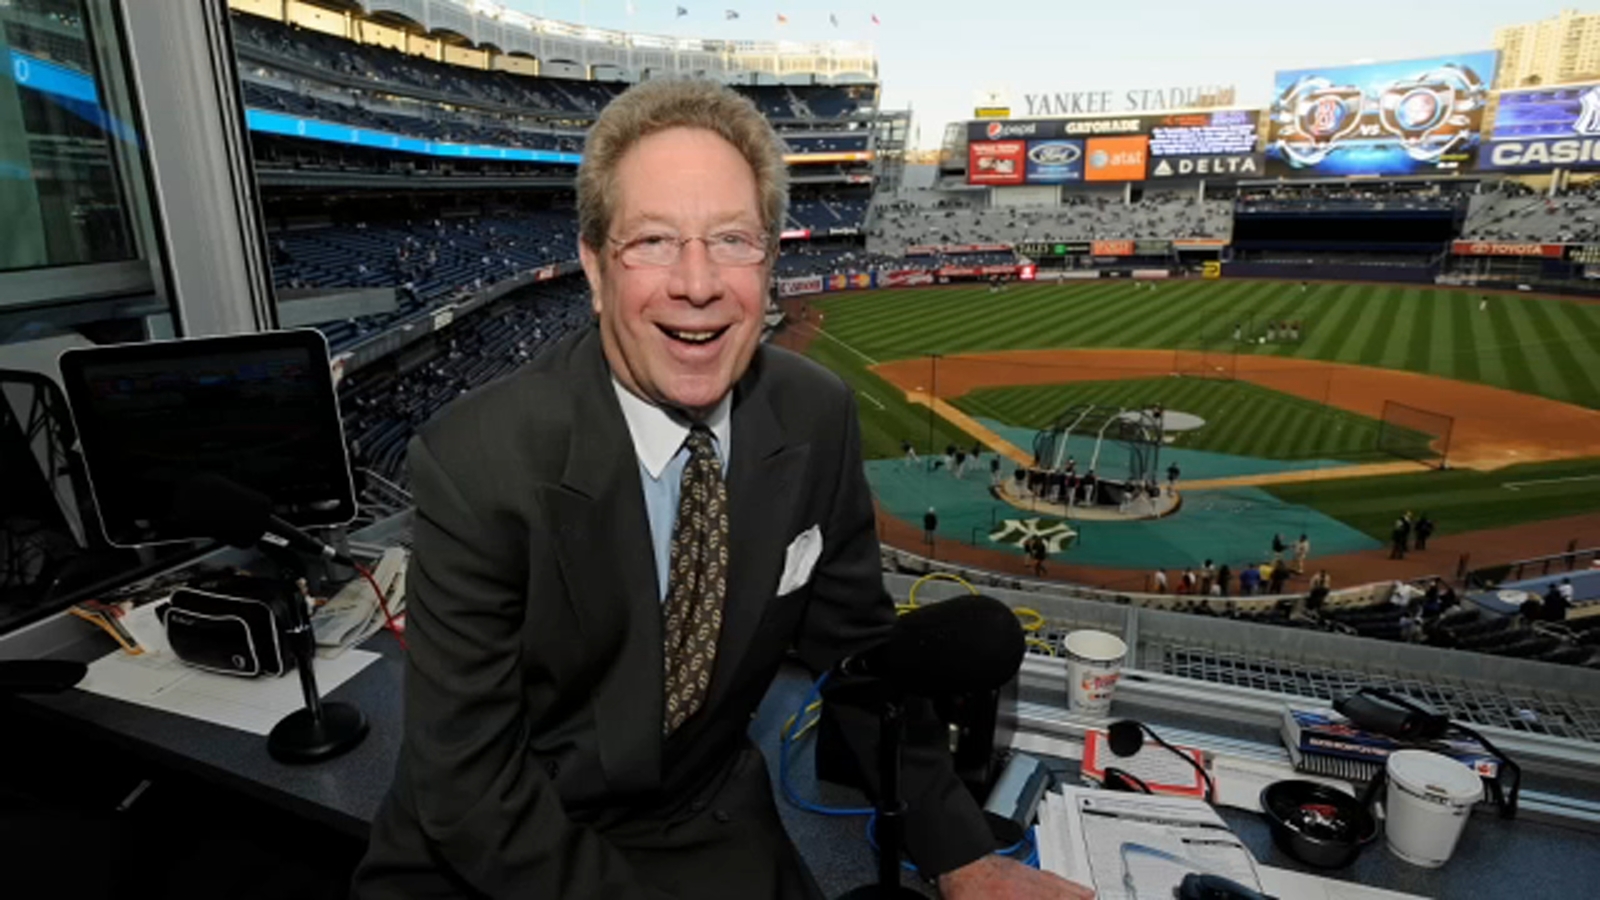 John Sterling retiring: Legendary play-by-play radio voice of New York Yankees leaving after 36 seasons [Video]